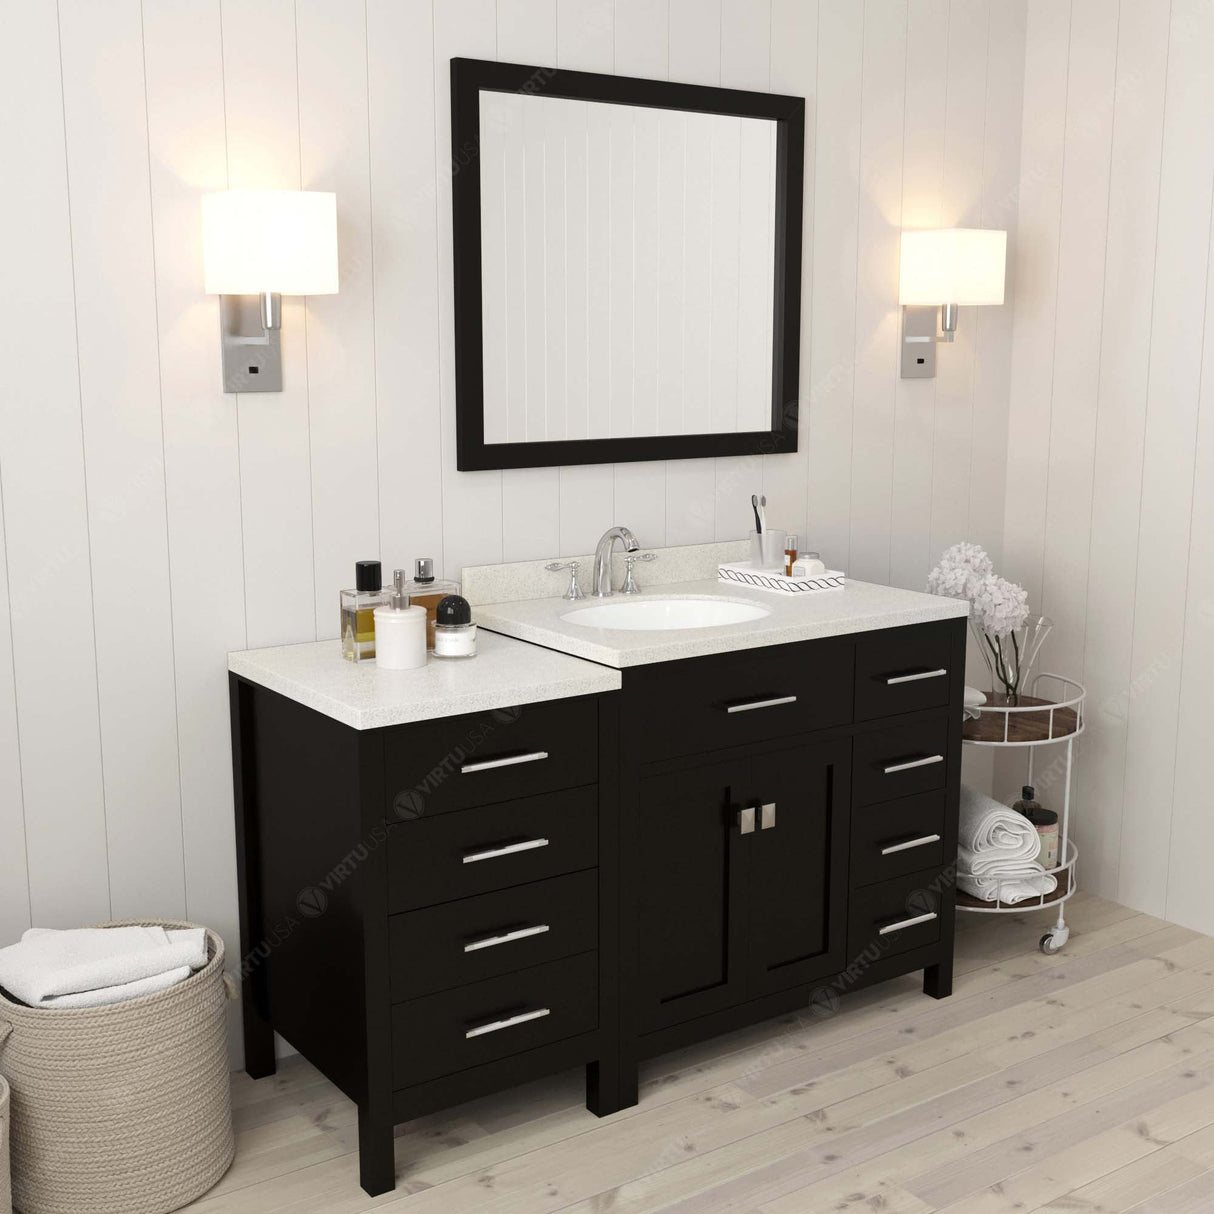 Virtu USA Caroline Parkway 57" Single Bath Vanity with Dazzle White White Quartz Top and Round Sink with Matching Mirror